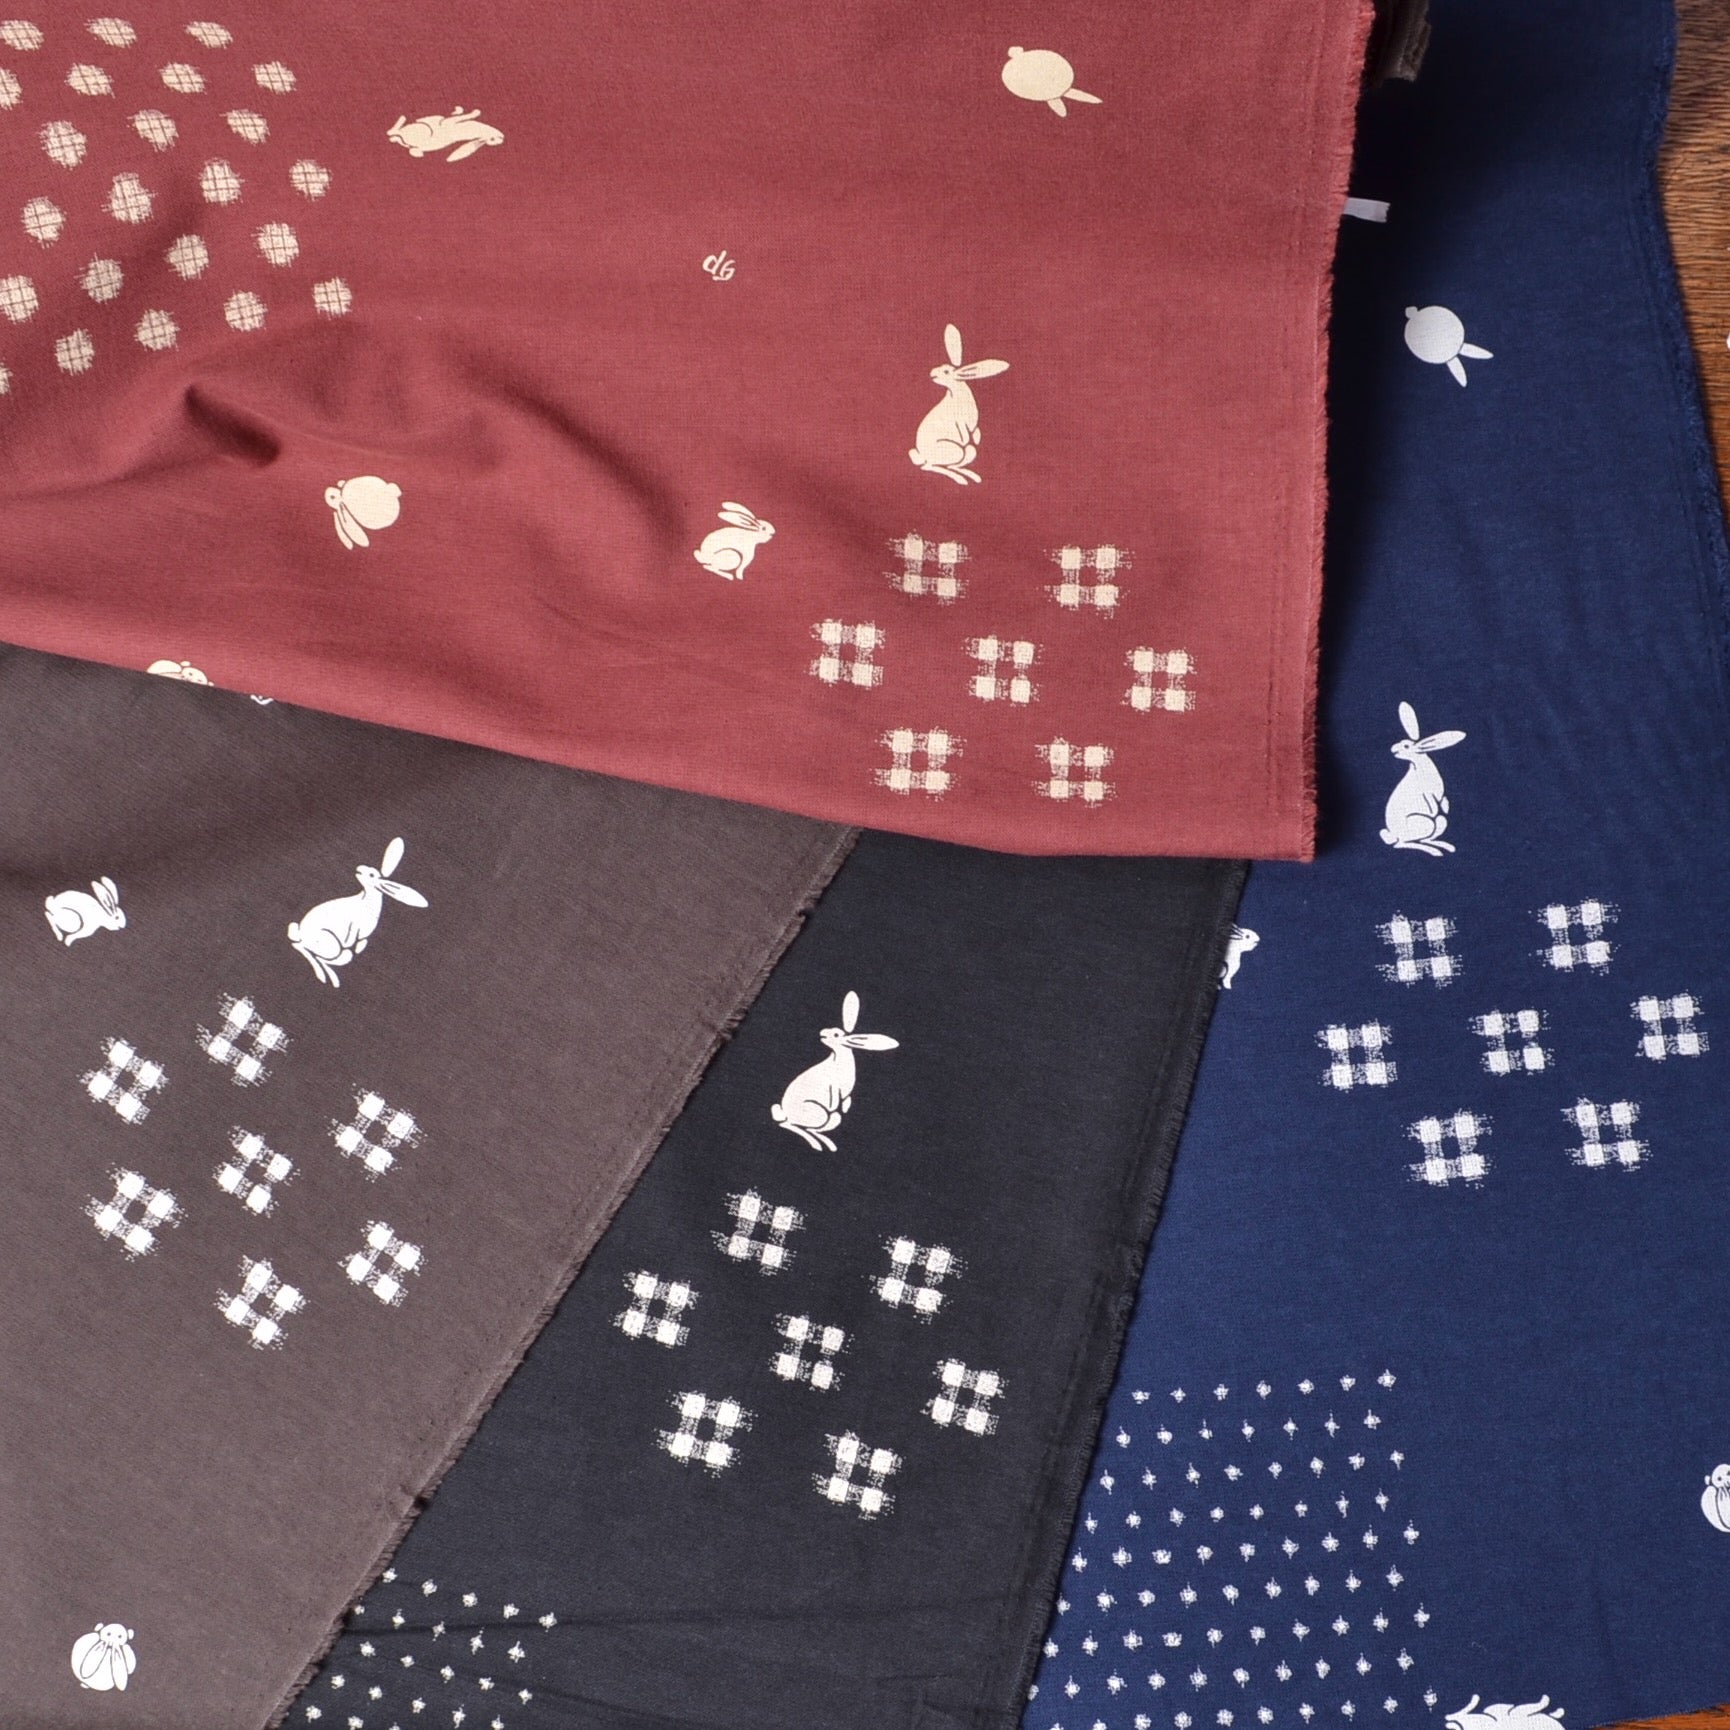 Japanese Wagara fabric, Red with Bunnies